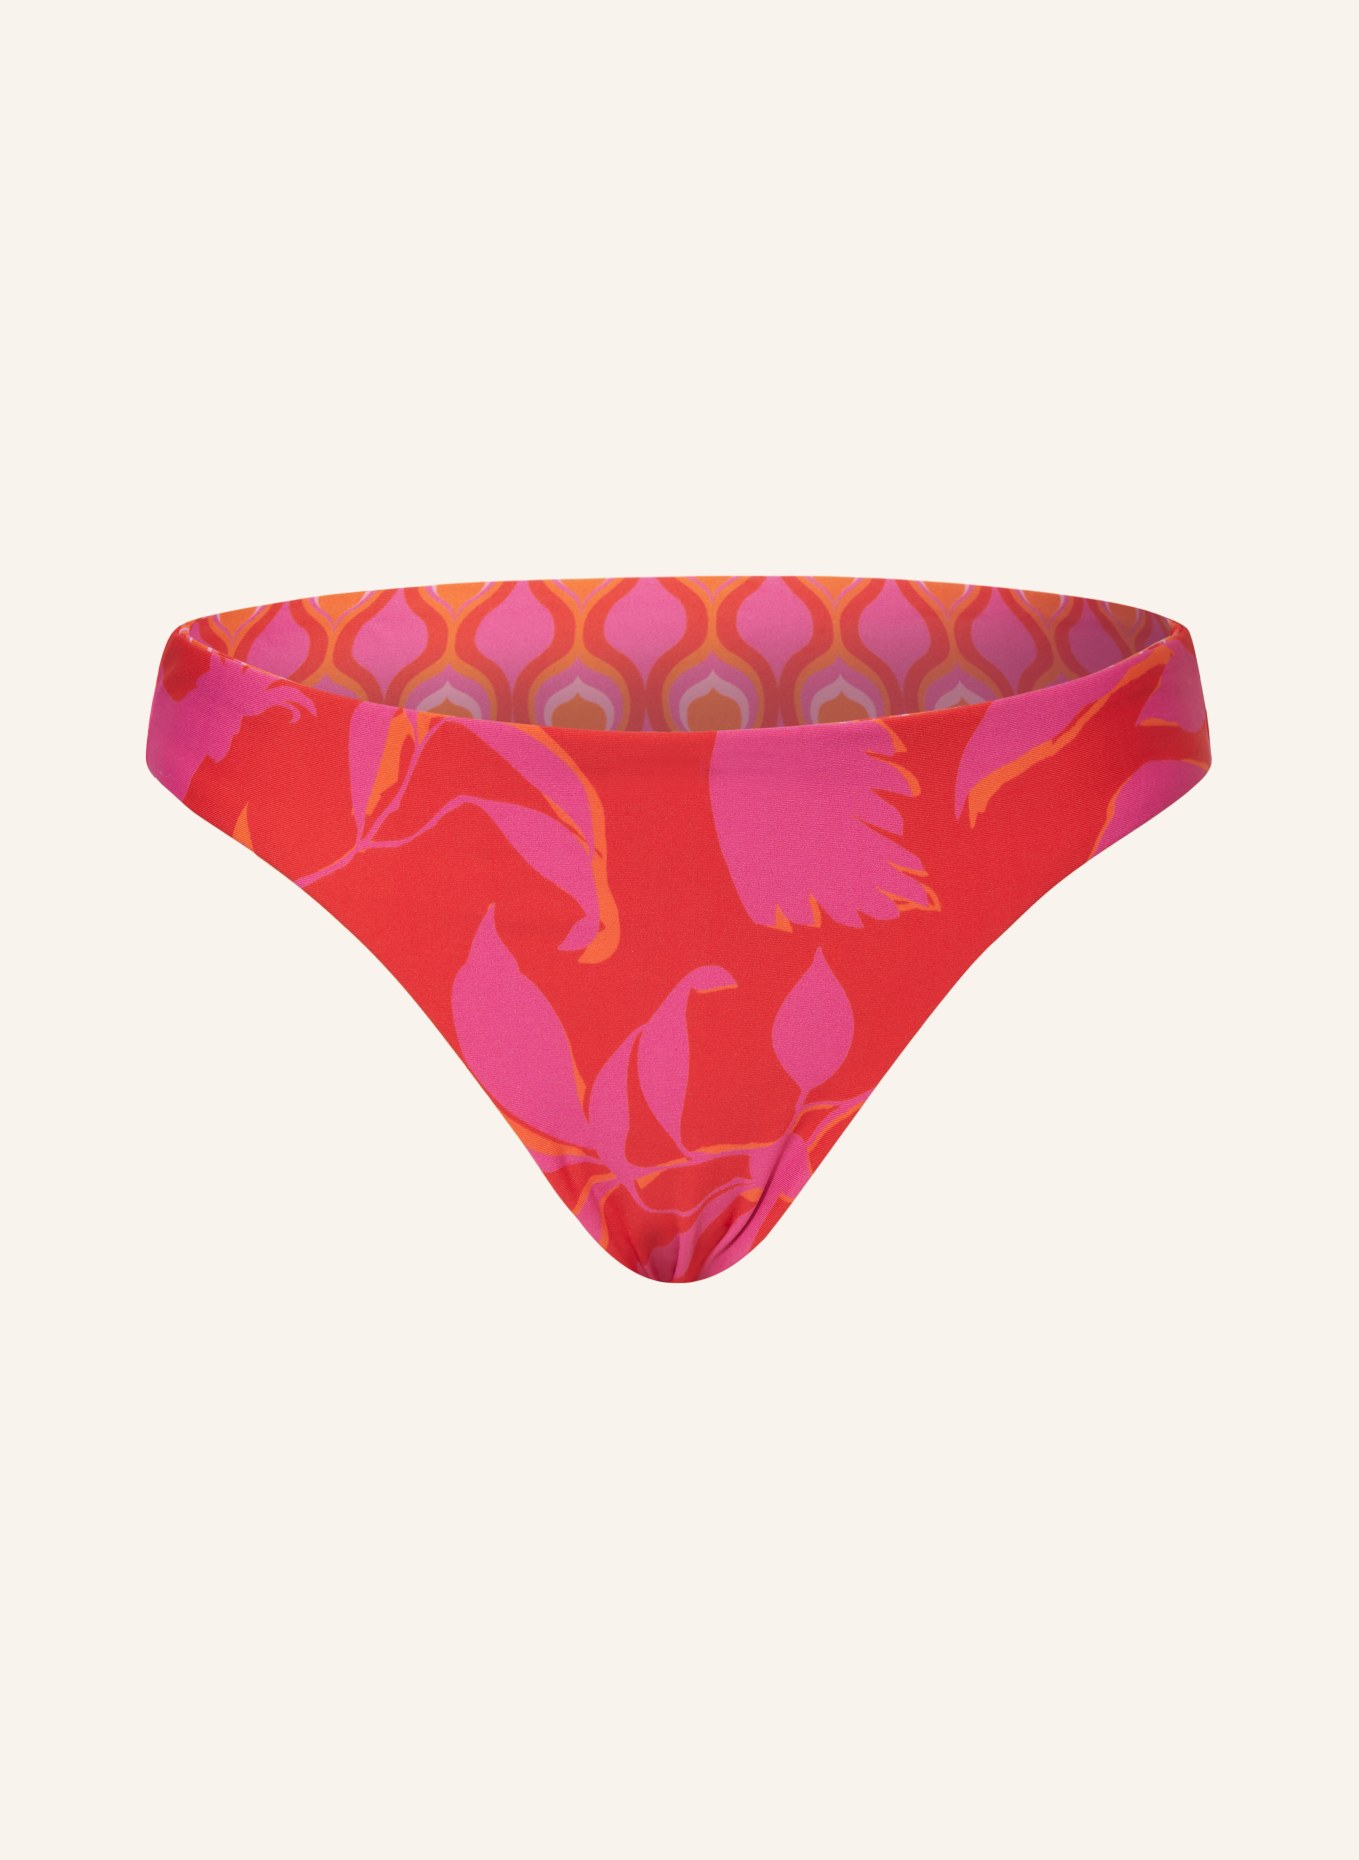 SEAFOLLY Panty-Bikini-Hose BIRDS OF PARADISE zum Wenden, Farbe: ROT/ PINK/ ORANGE (Bild 1)